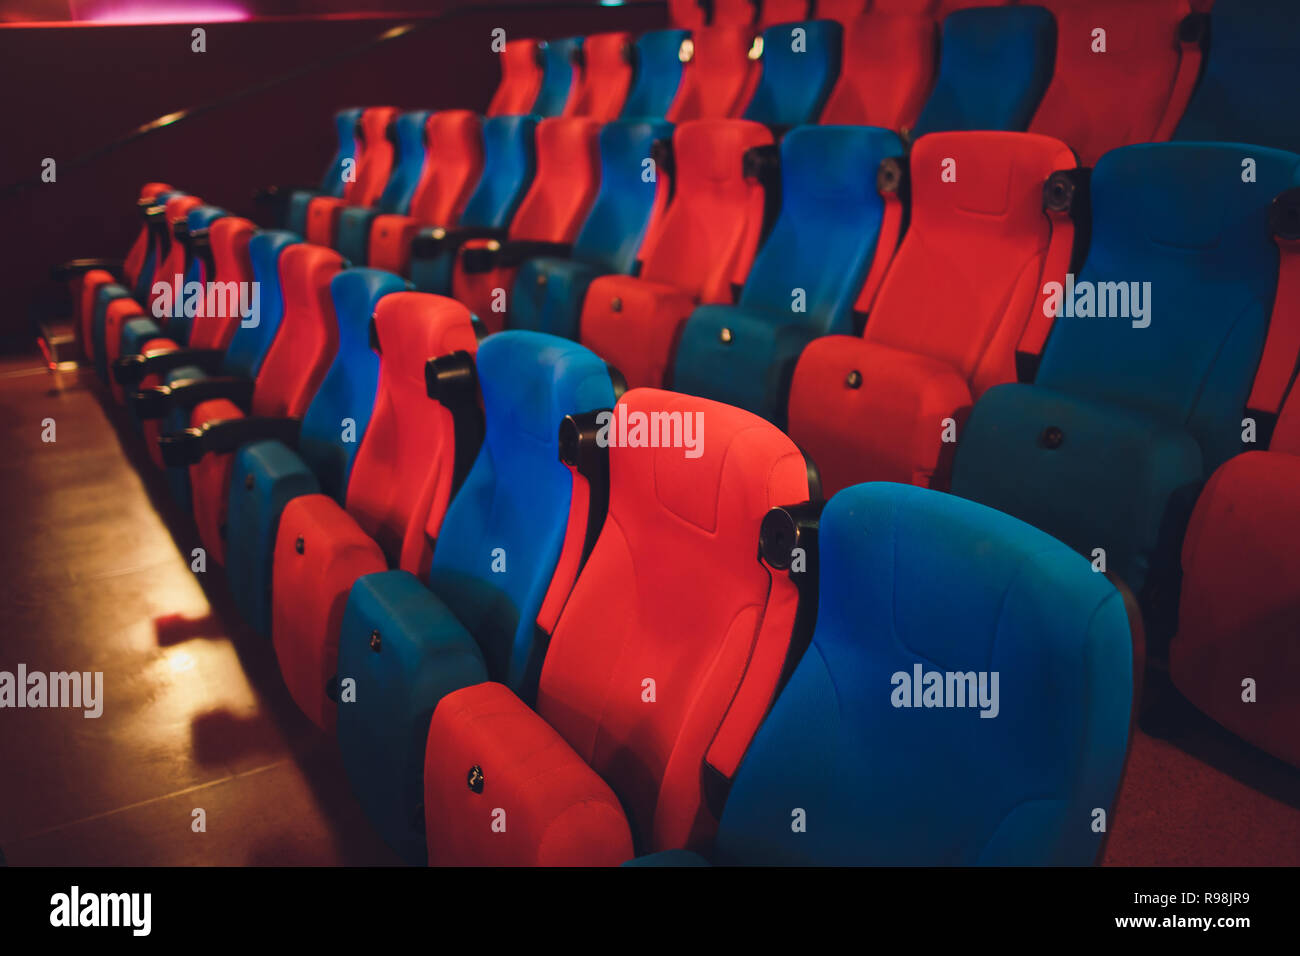 Kino Theater Stockfotos und -bilder Kaufen - Alamy